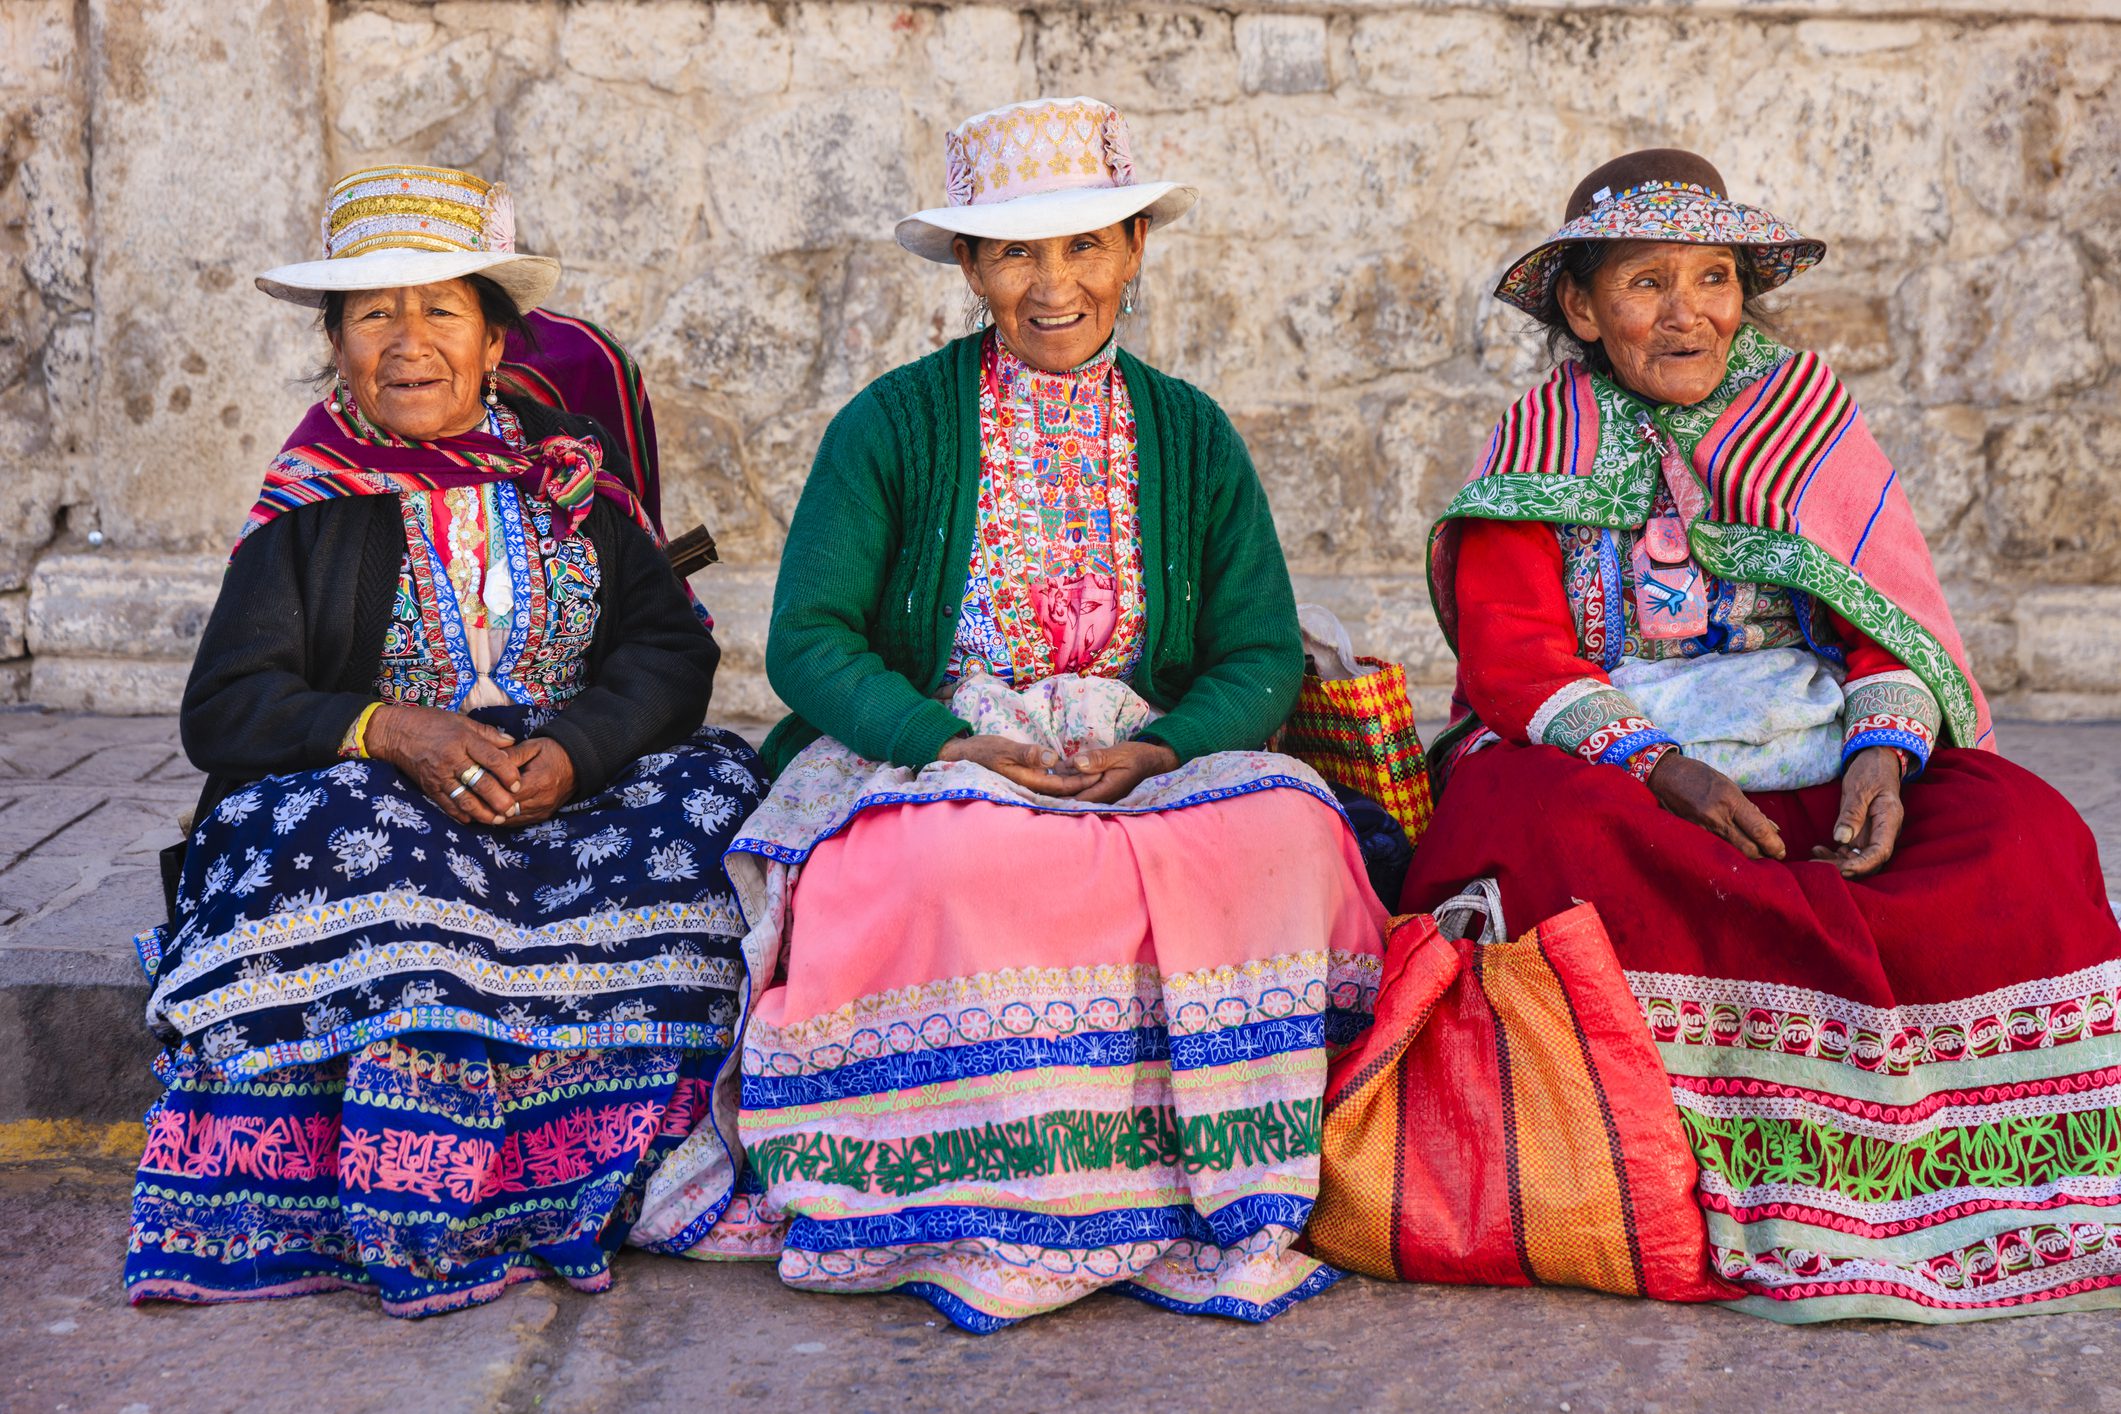 Peruvian women in national clothing, Chivay, Peru